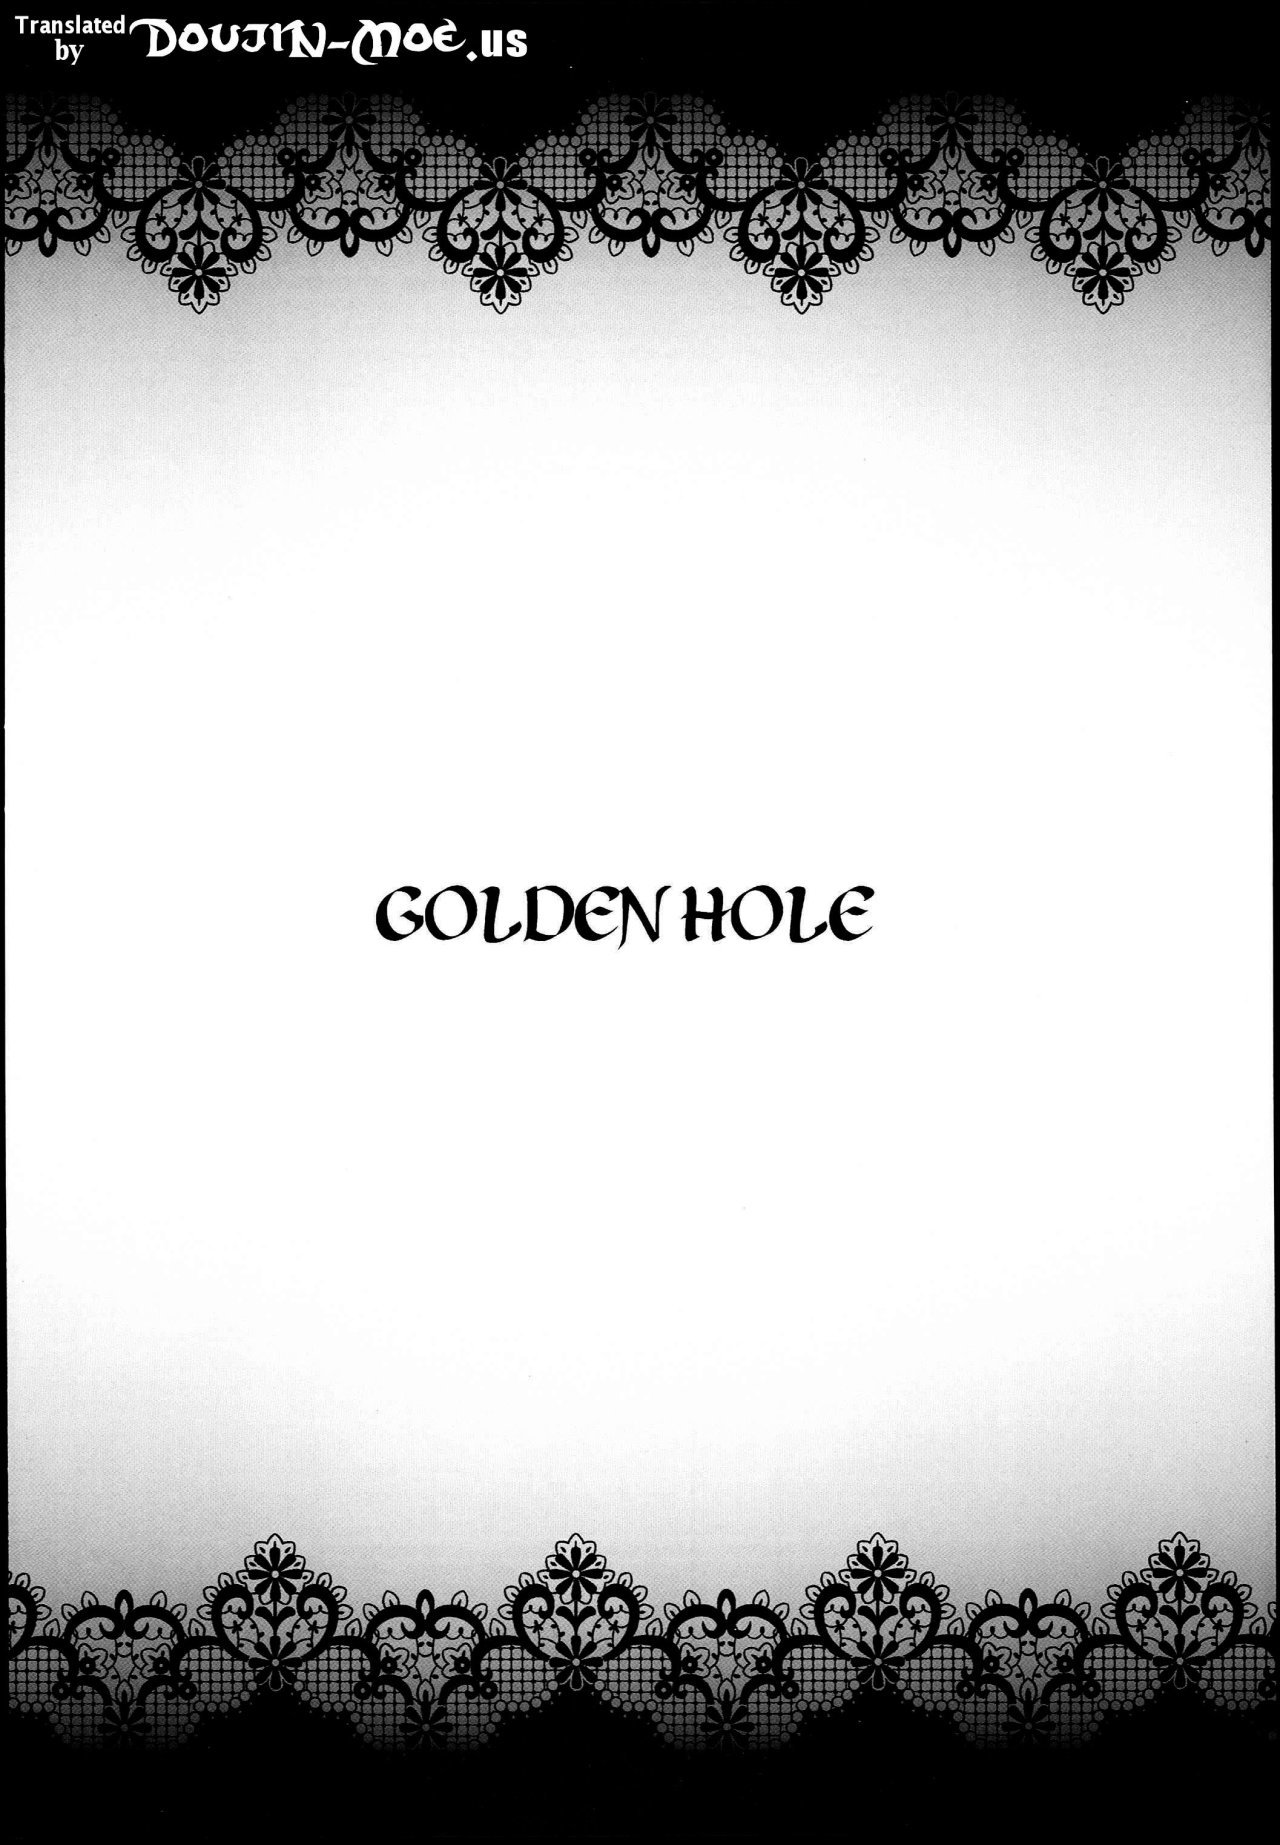 GOLDEN HOLE - 2